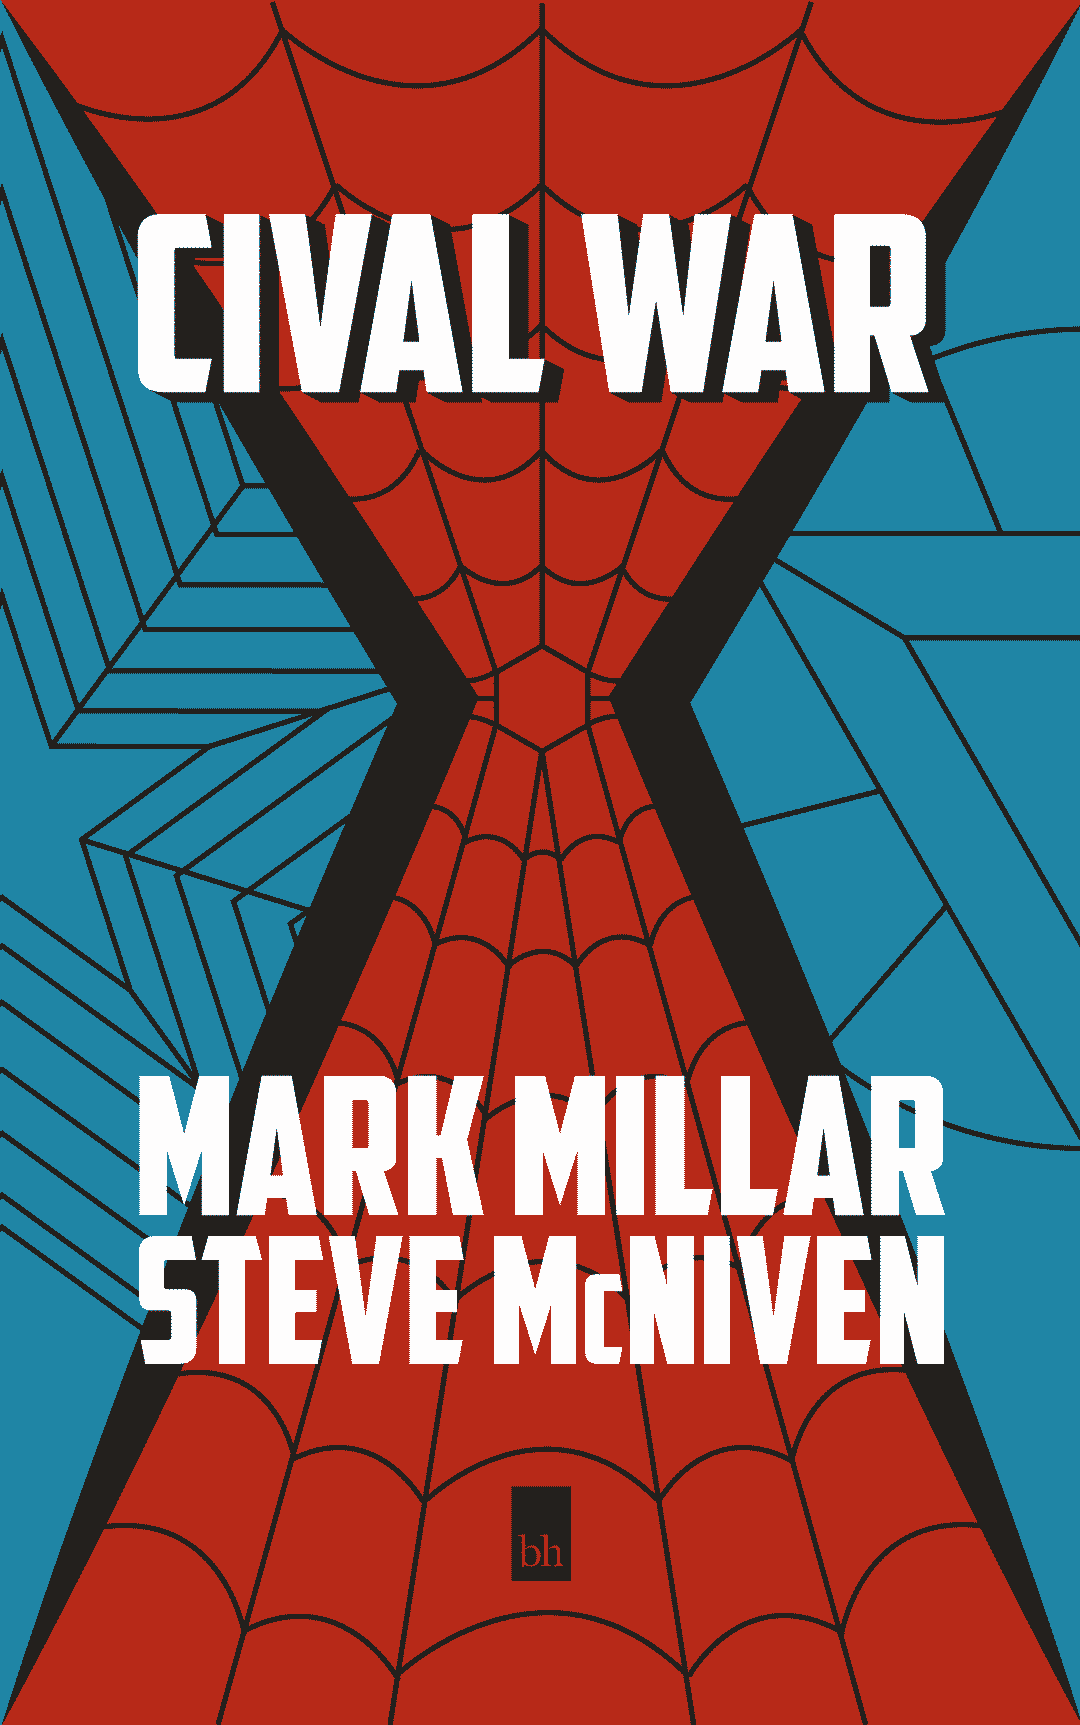 Book cover mock thumbnail for Marvel: Civil War